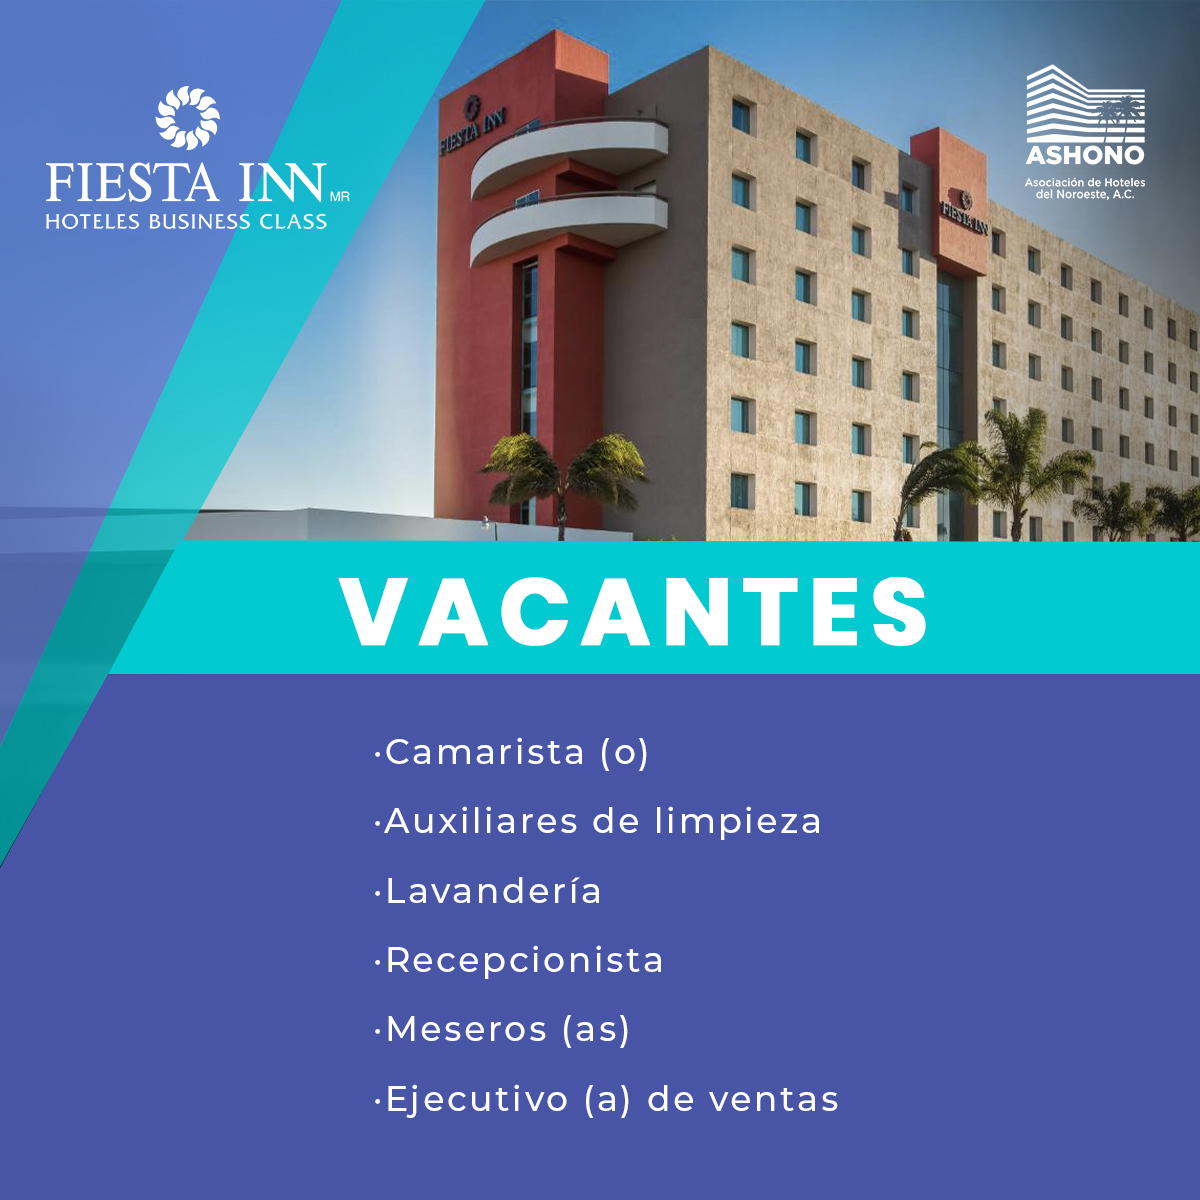 Fiesta Inn Hoteles